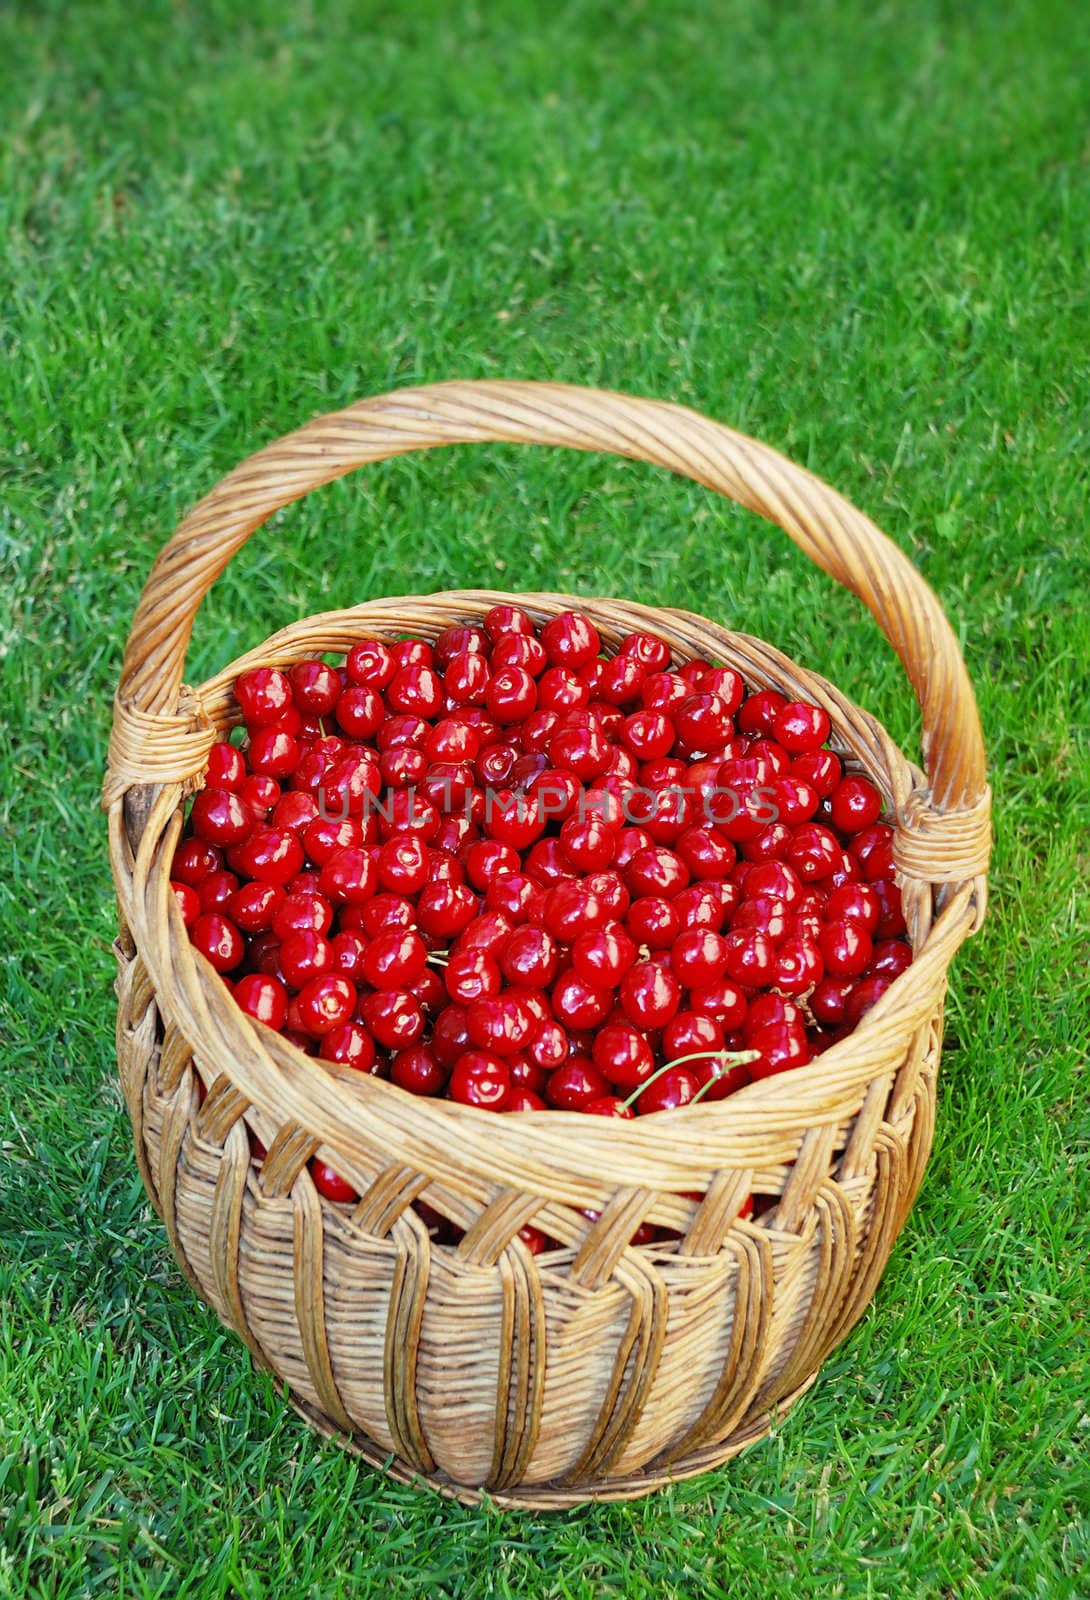 Bing cherries in wooden basket on the grass.